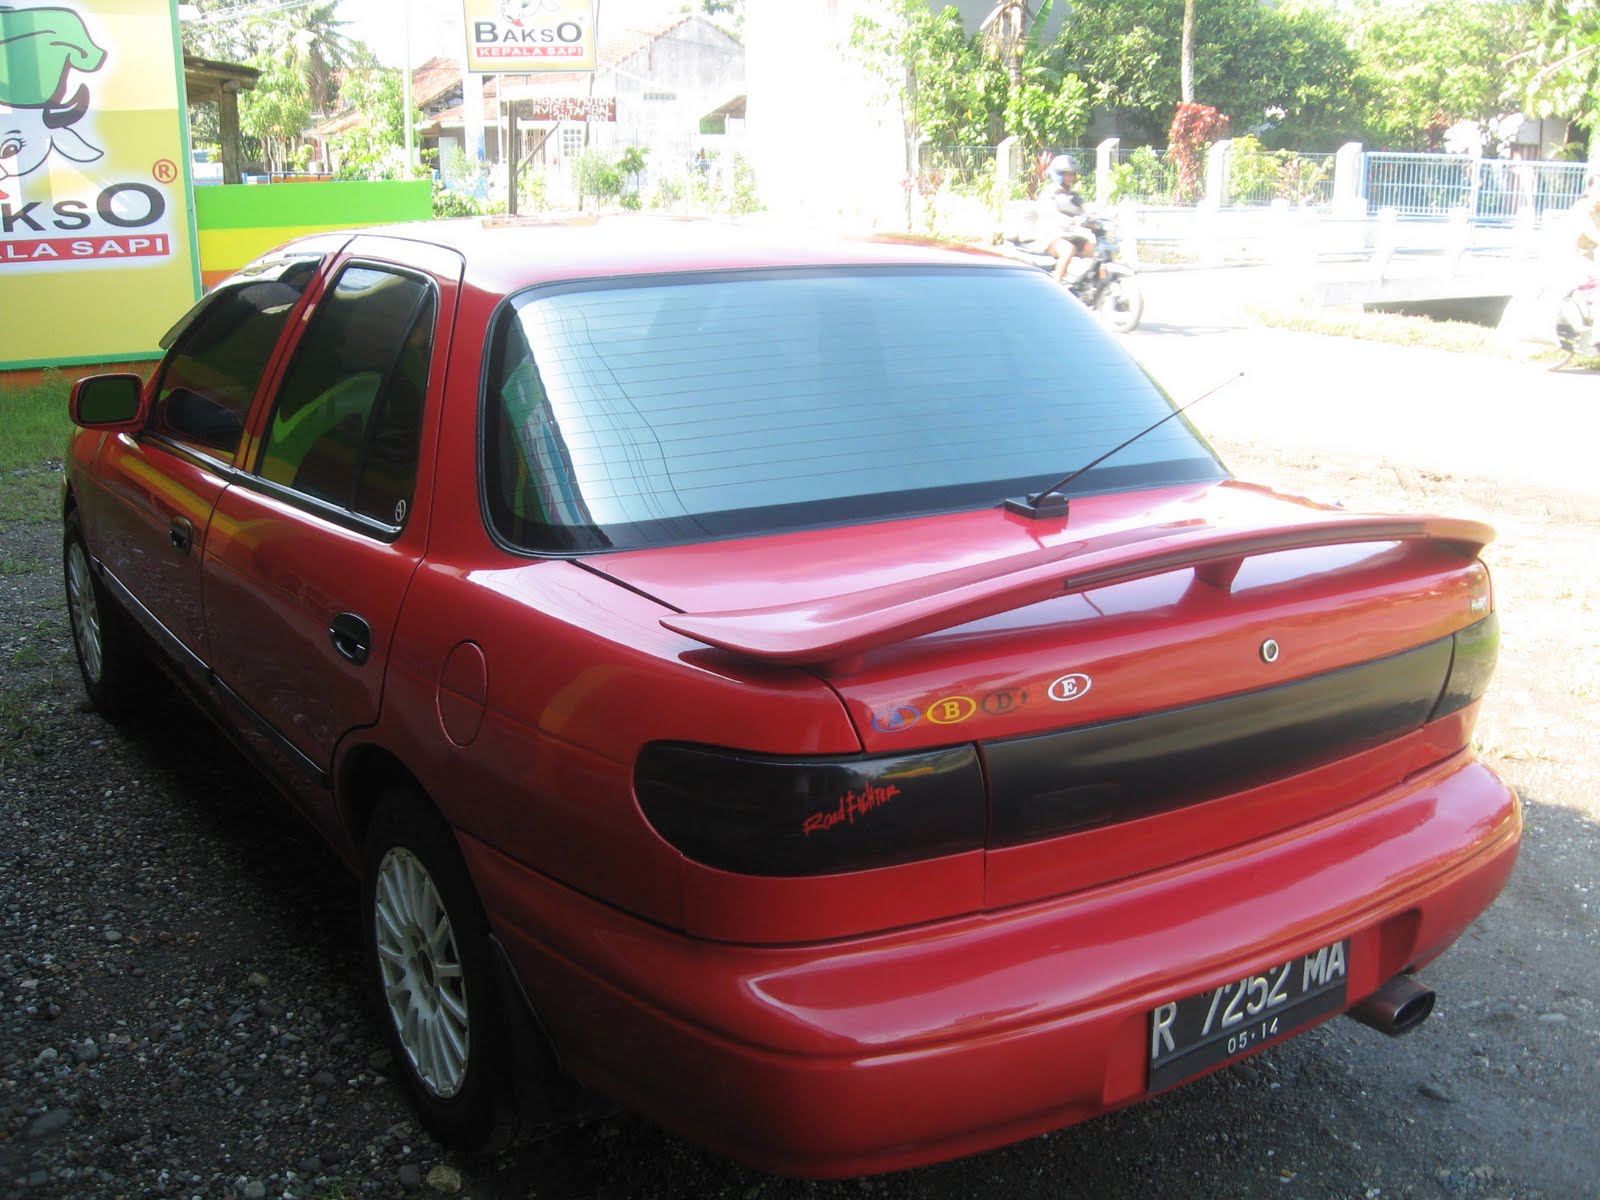  Mobil  Timor harga mobil  timor sohc bekas harga harga 